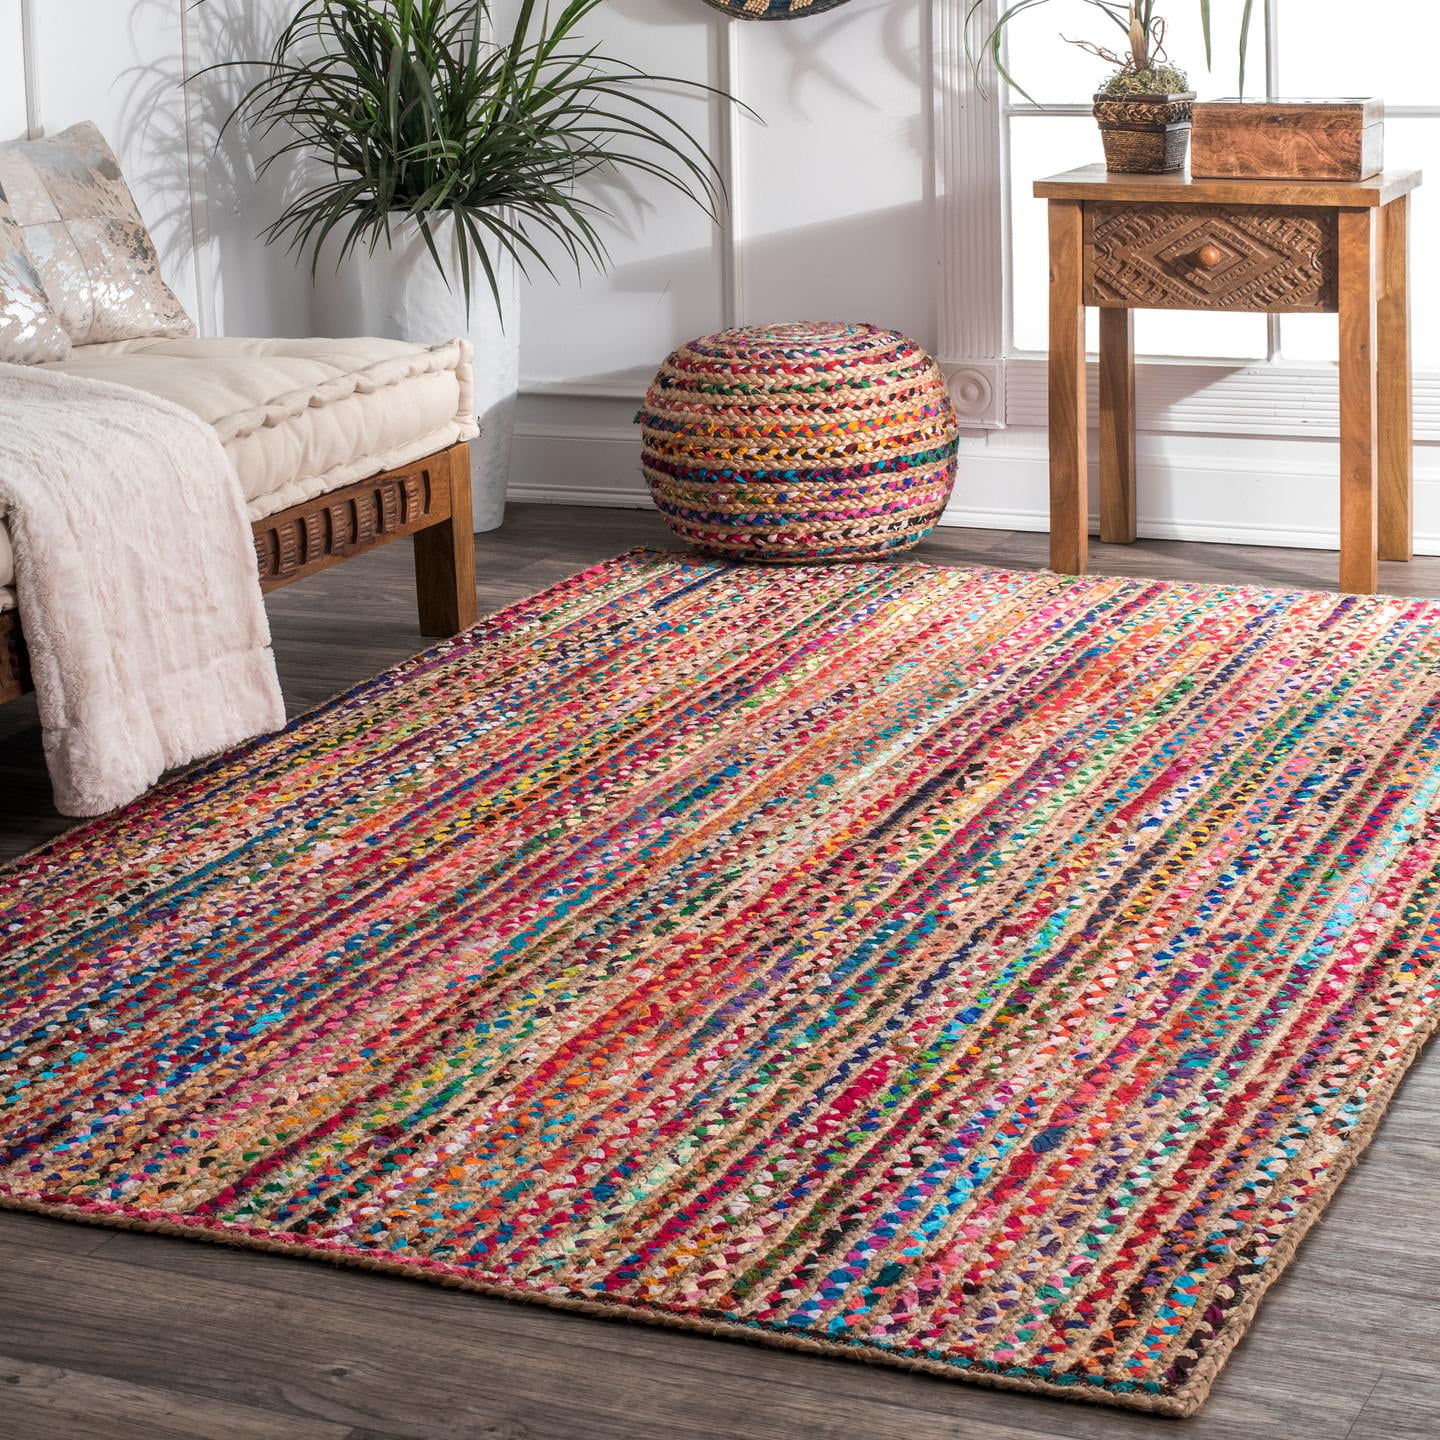 Indian Handmade Paper Shaggy/Chindi Accent Rug,Carpet,Floor Mat,Bathrug-24x36'' 